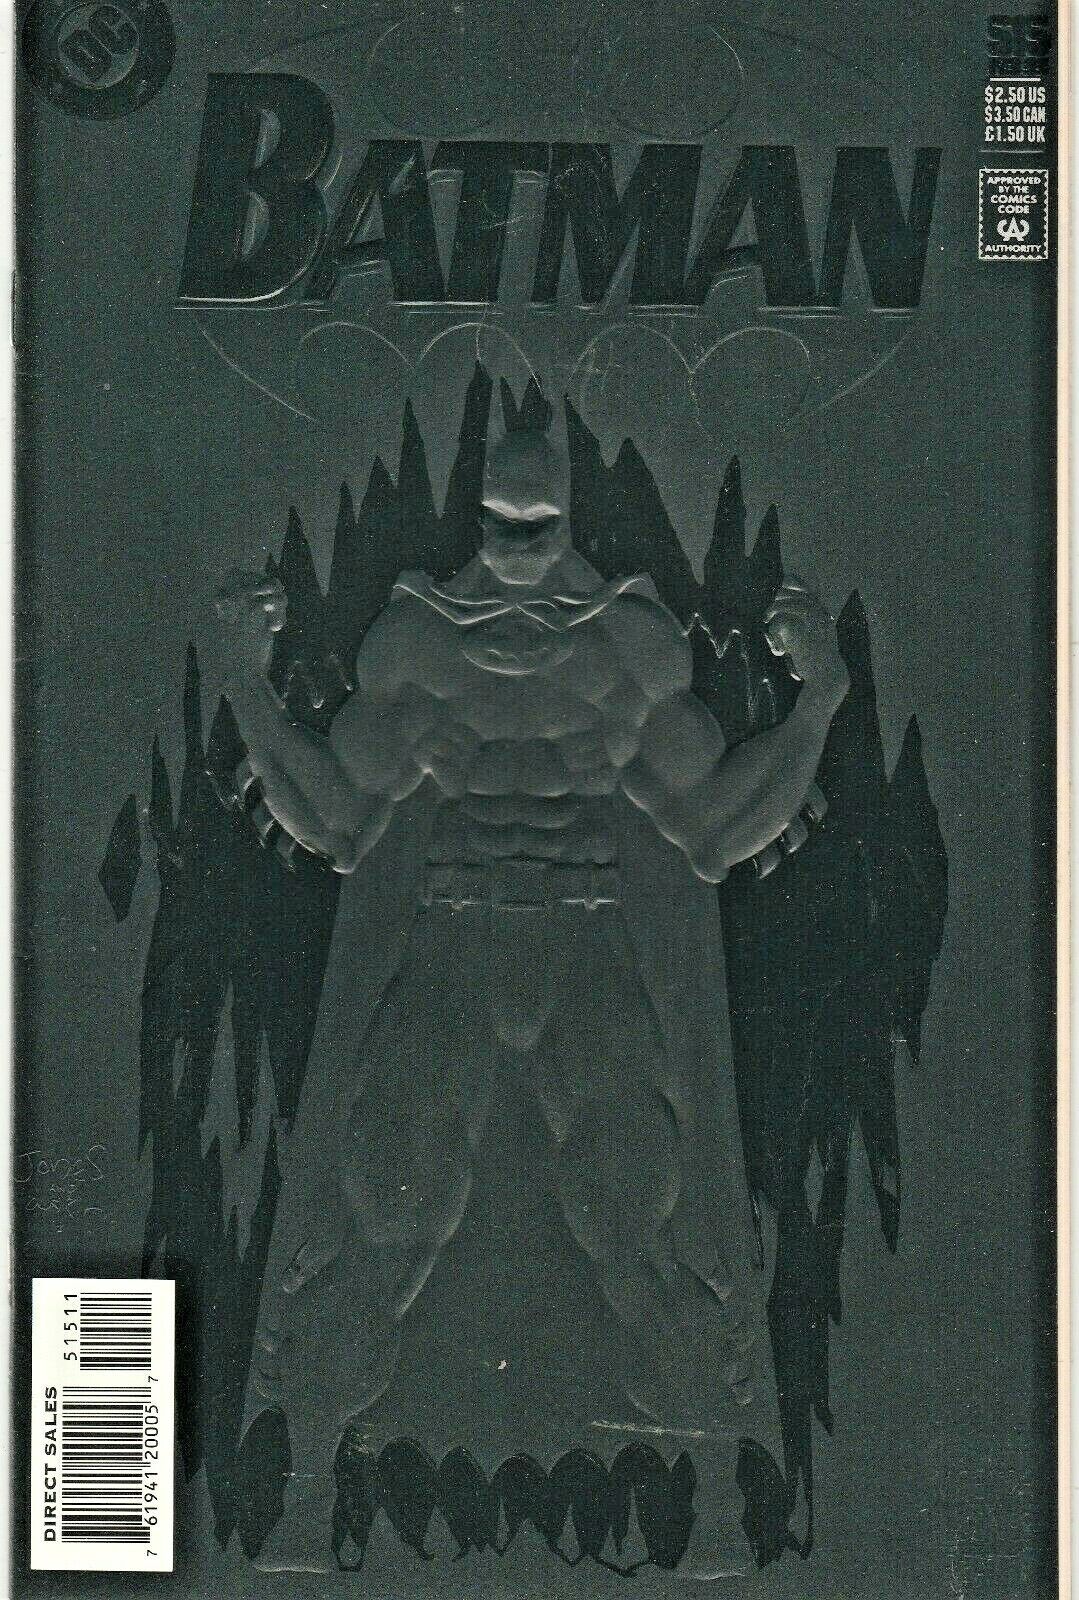 BATMAN ORIGINAL SERIES #515  TROIKA I  EMBOSSED VARIANT   DC  1995  NICE